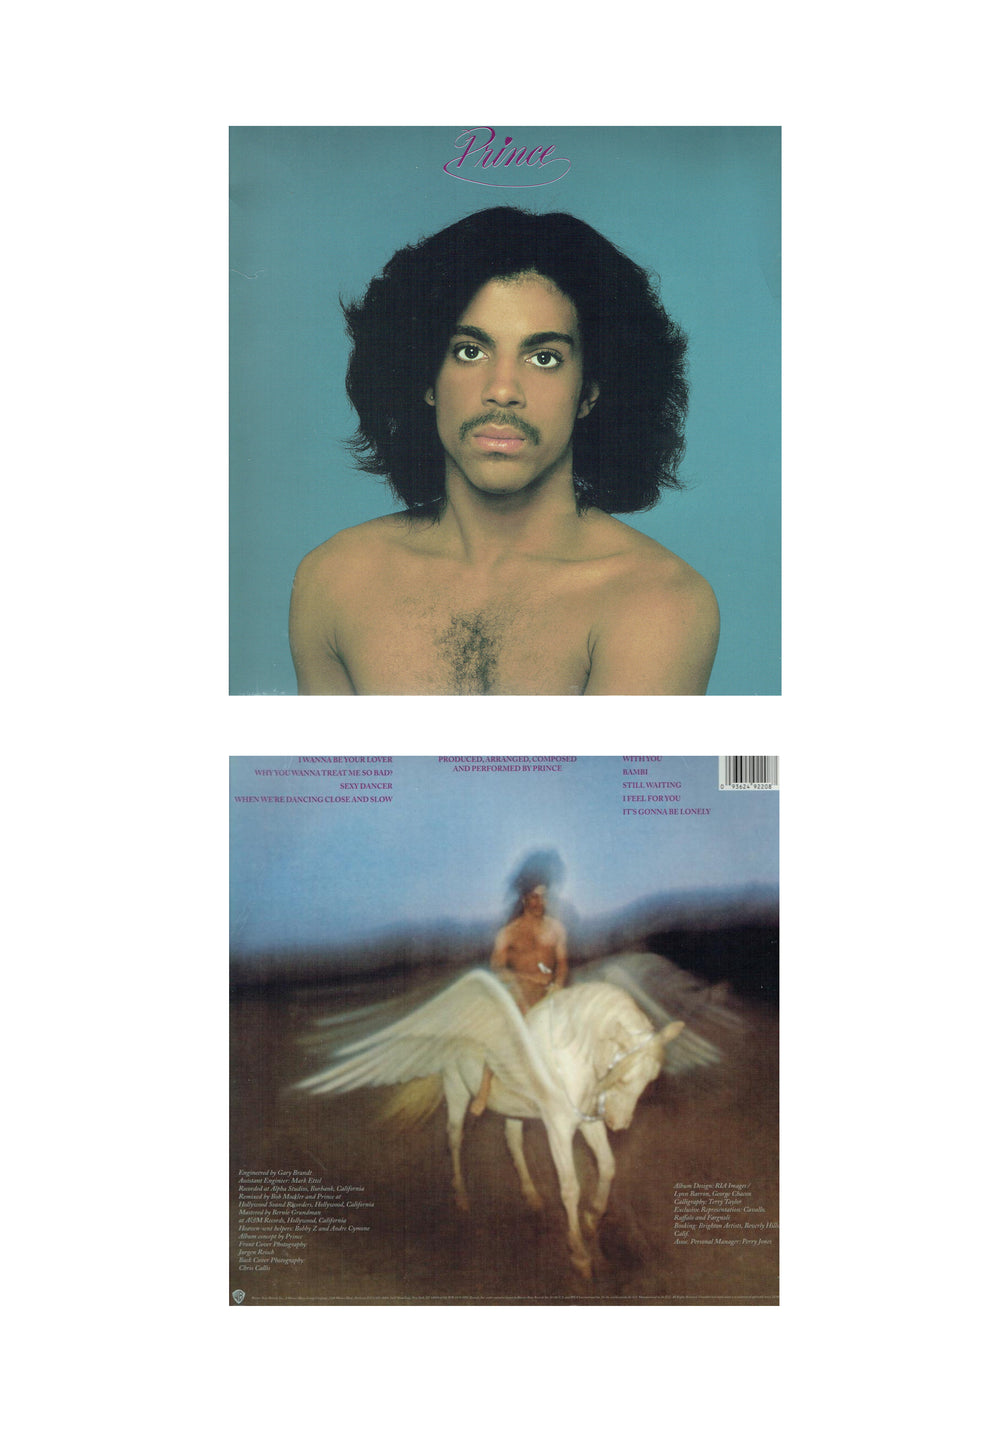 Prince 1979 Prince Vinyl Album EU Original Release Pre Loved Near Mint